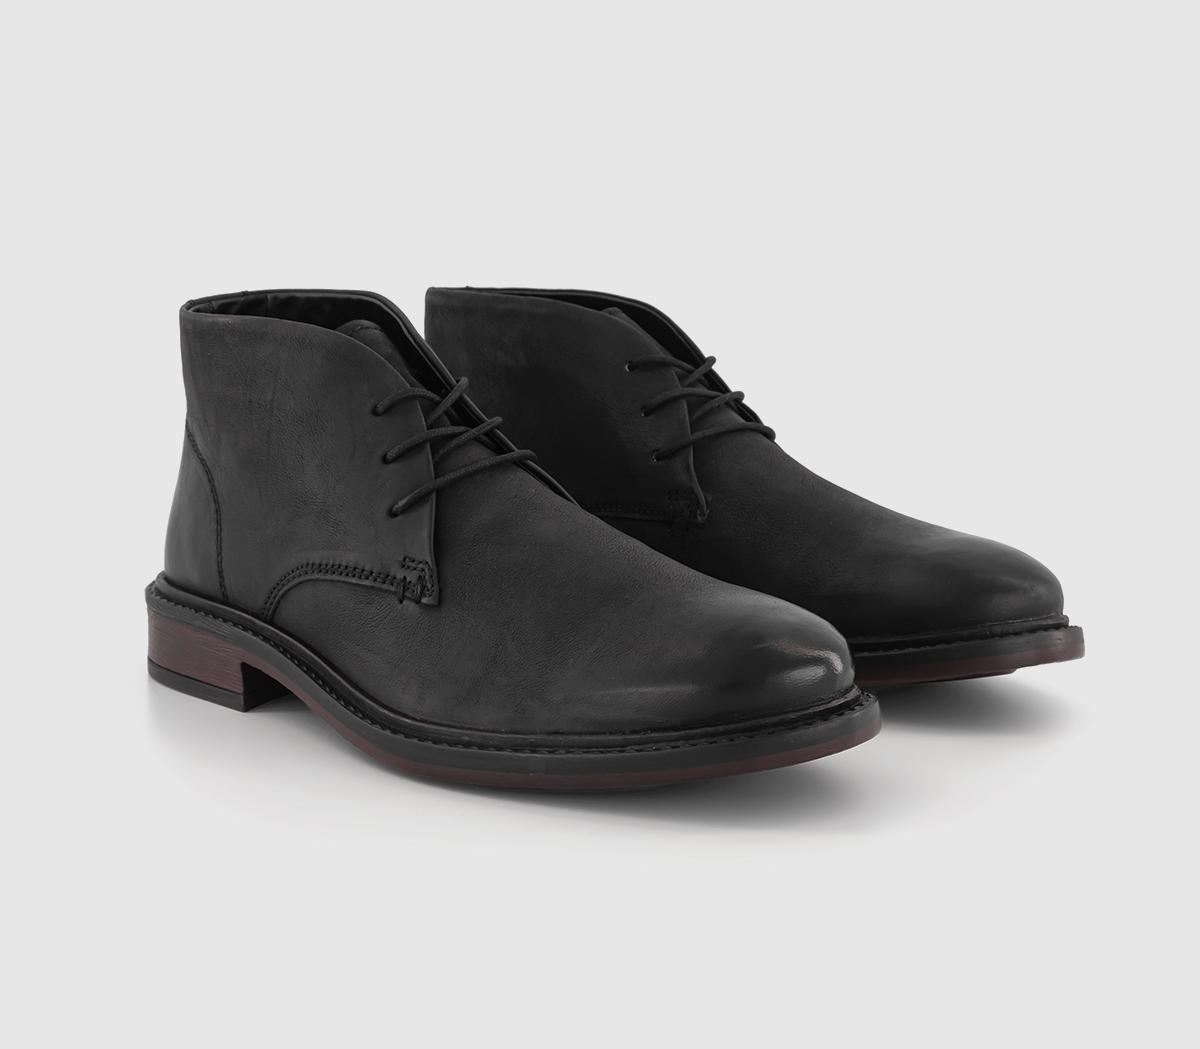 OFFICE Mens Burlington Chukka Boots Black Leather, 10